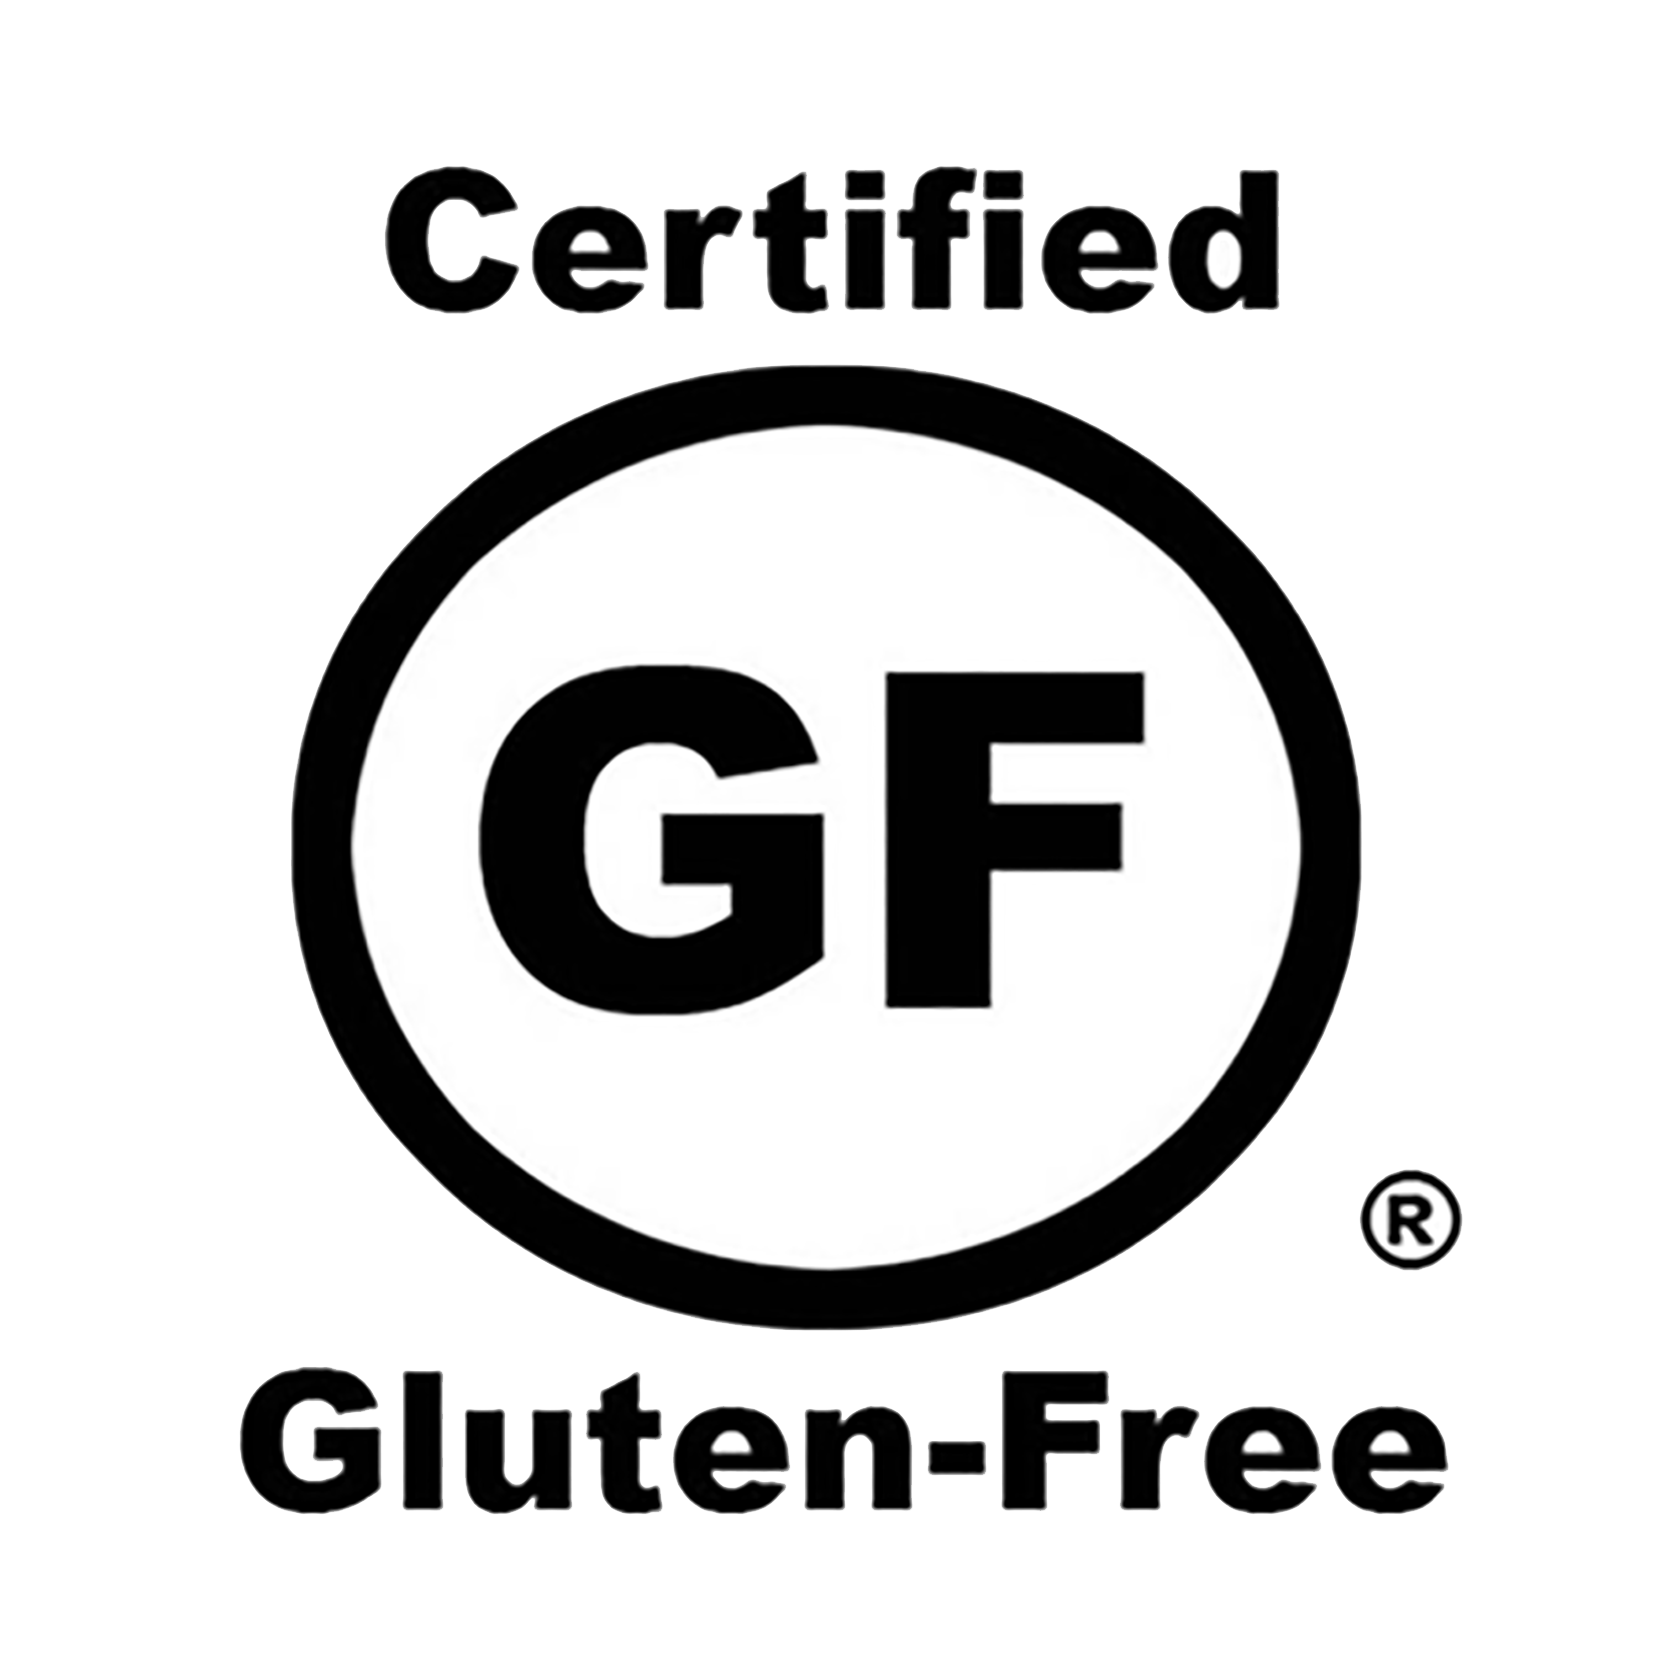 https://ksm66ashwagandhaa.com/wp-content/uploads/2021/08/Certifief-Gluten-free.png